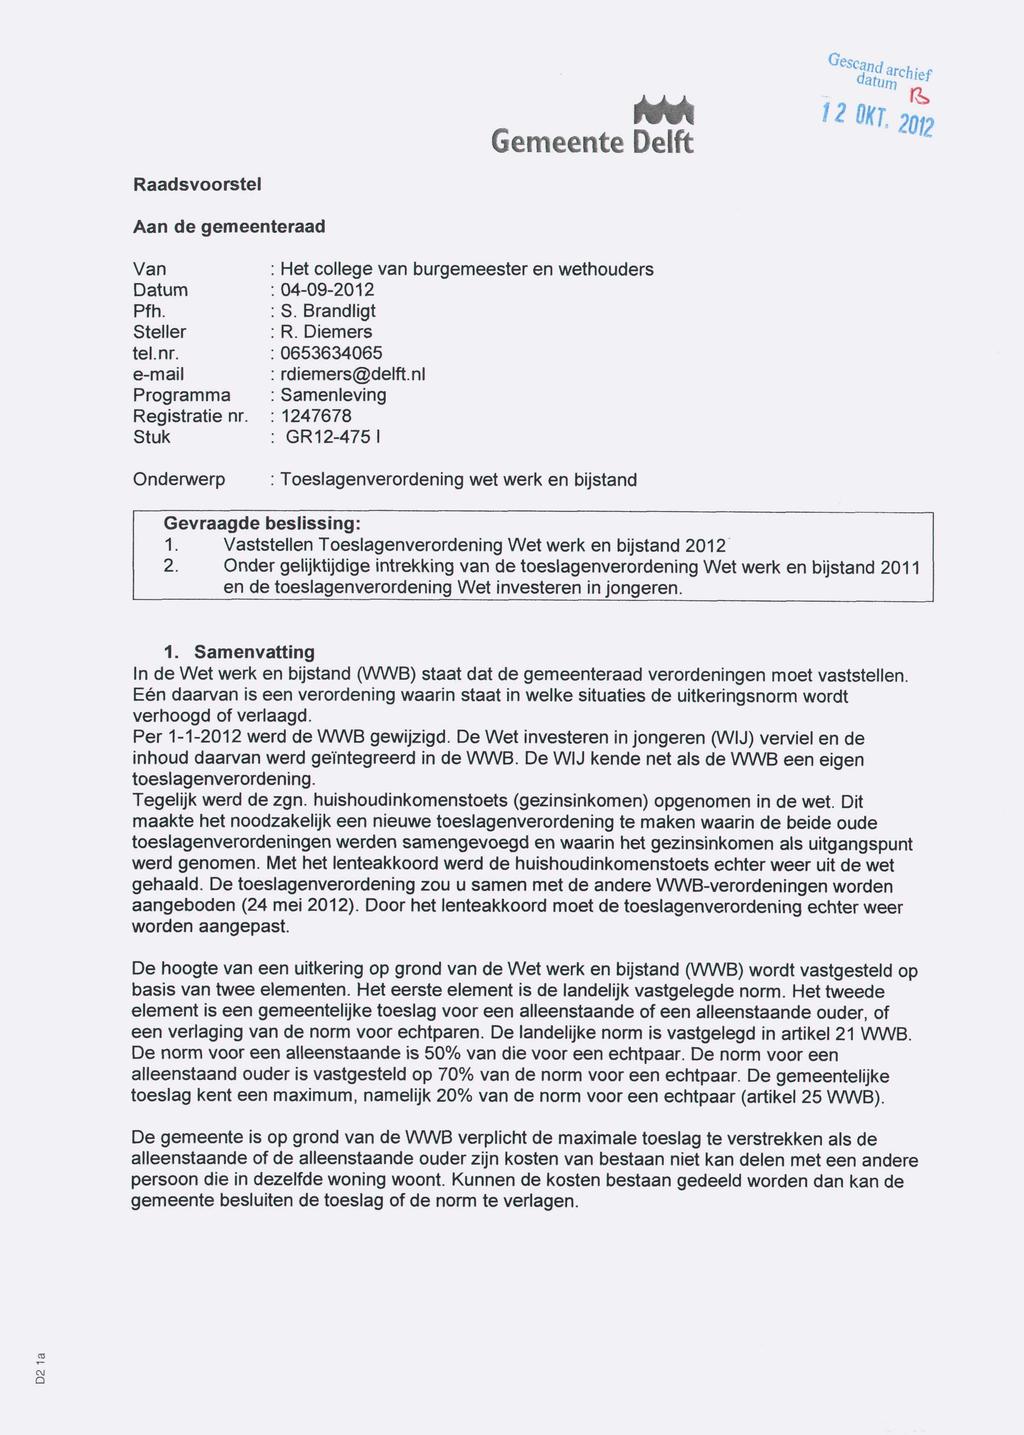 Raadsvoorstel Gemeente Delft 1 2 Ml 2012 Aan de gemeenteraad Van Datum Pfh. Steller tel.nr. e-mail Programma Registratie nr. Stuk Onderwerp Het college van burgemeester en wethouders 04-09-2012 S.